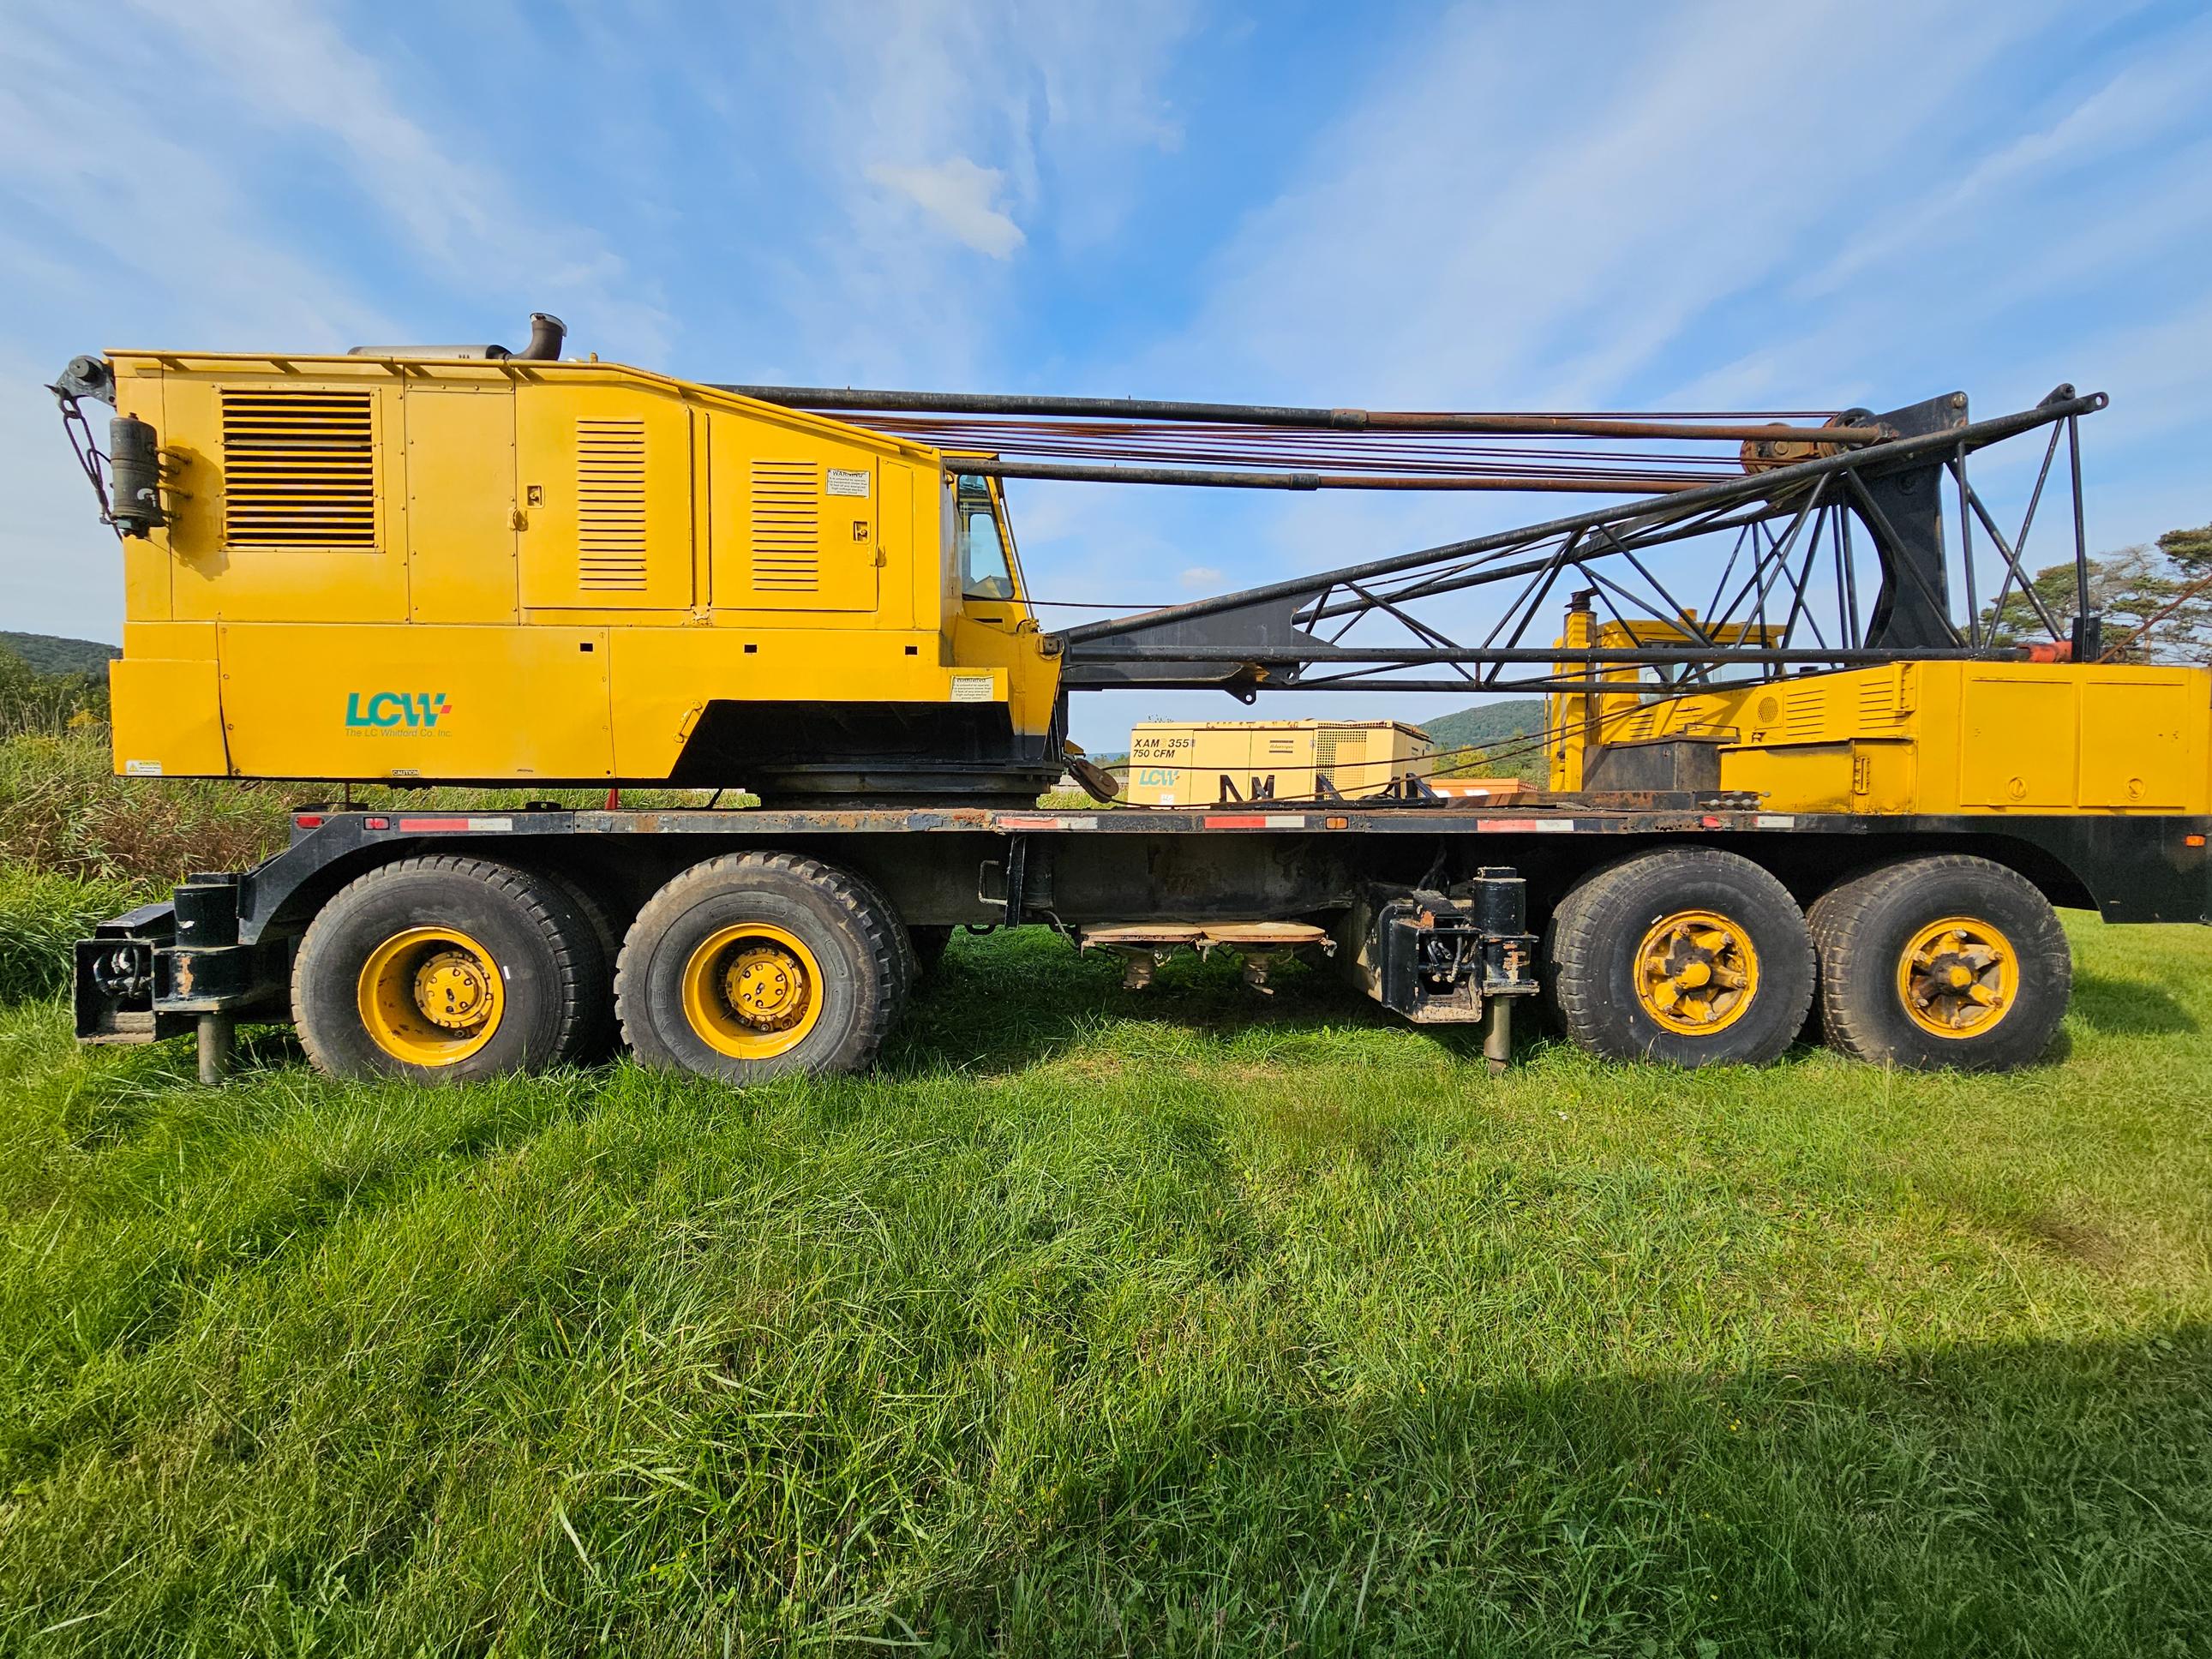 92006 – 1976 Lima TC 700 Truck crane – W460